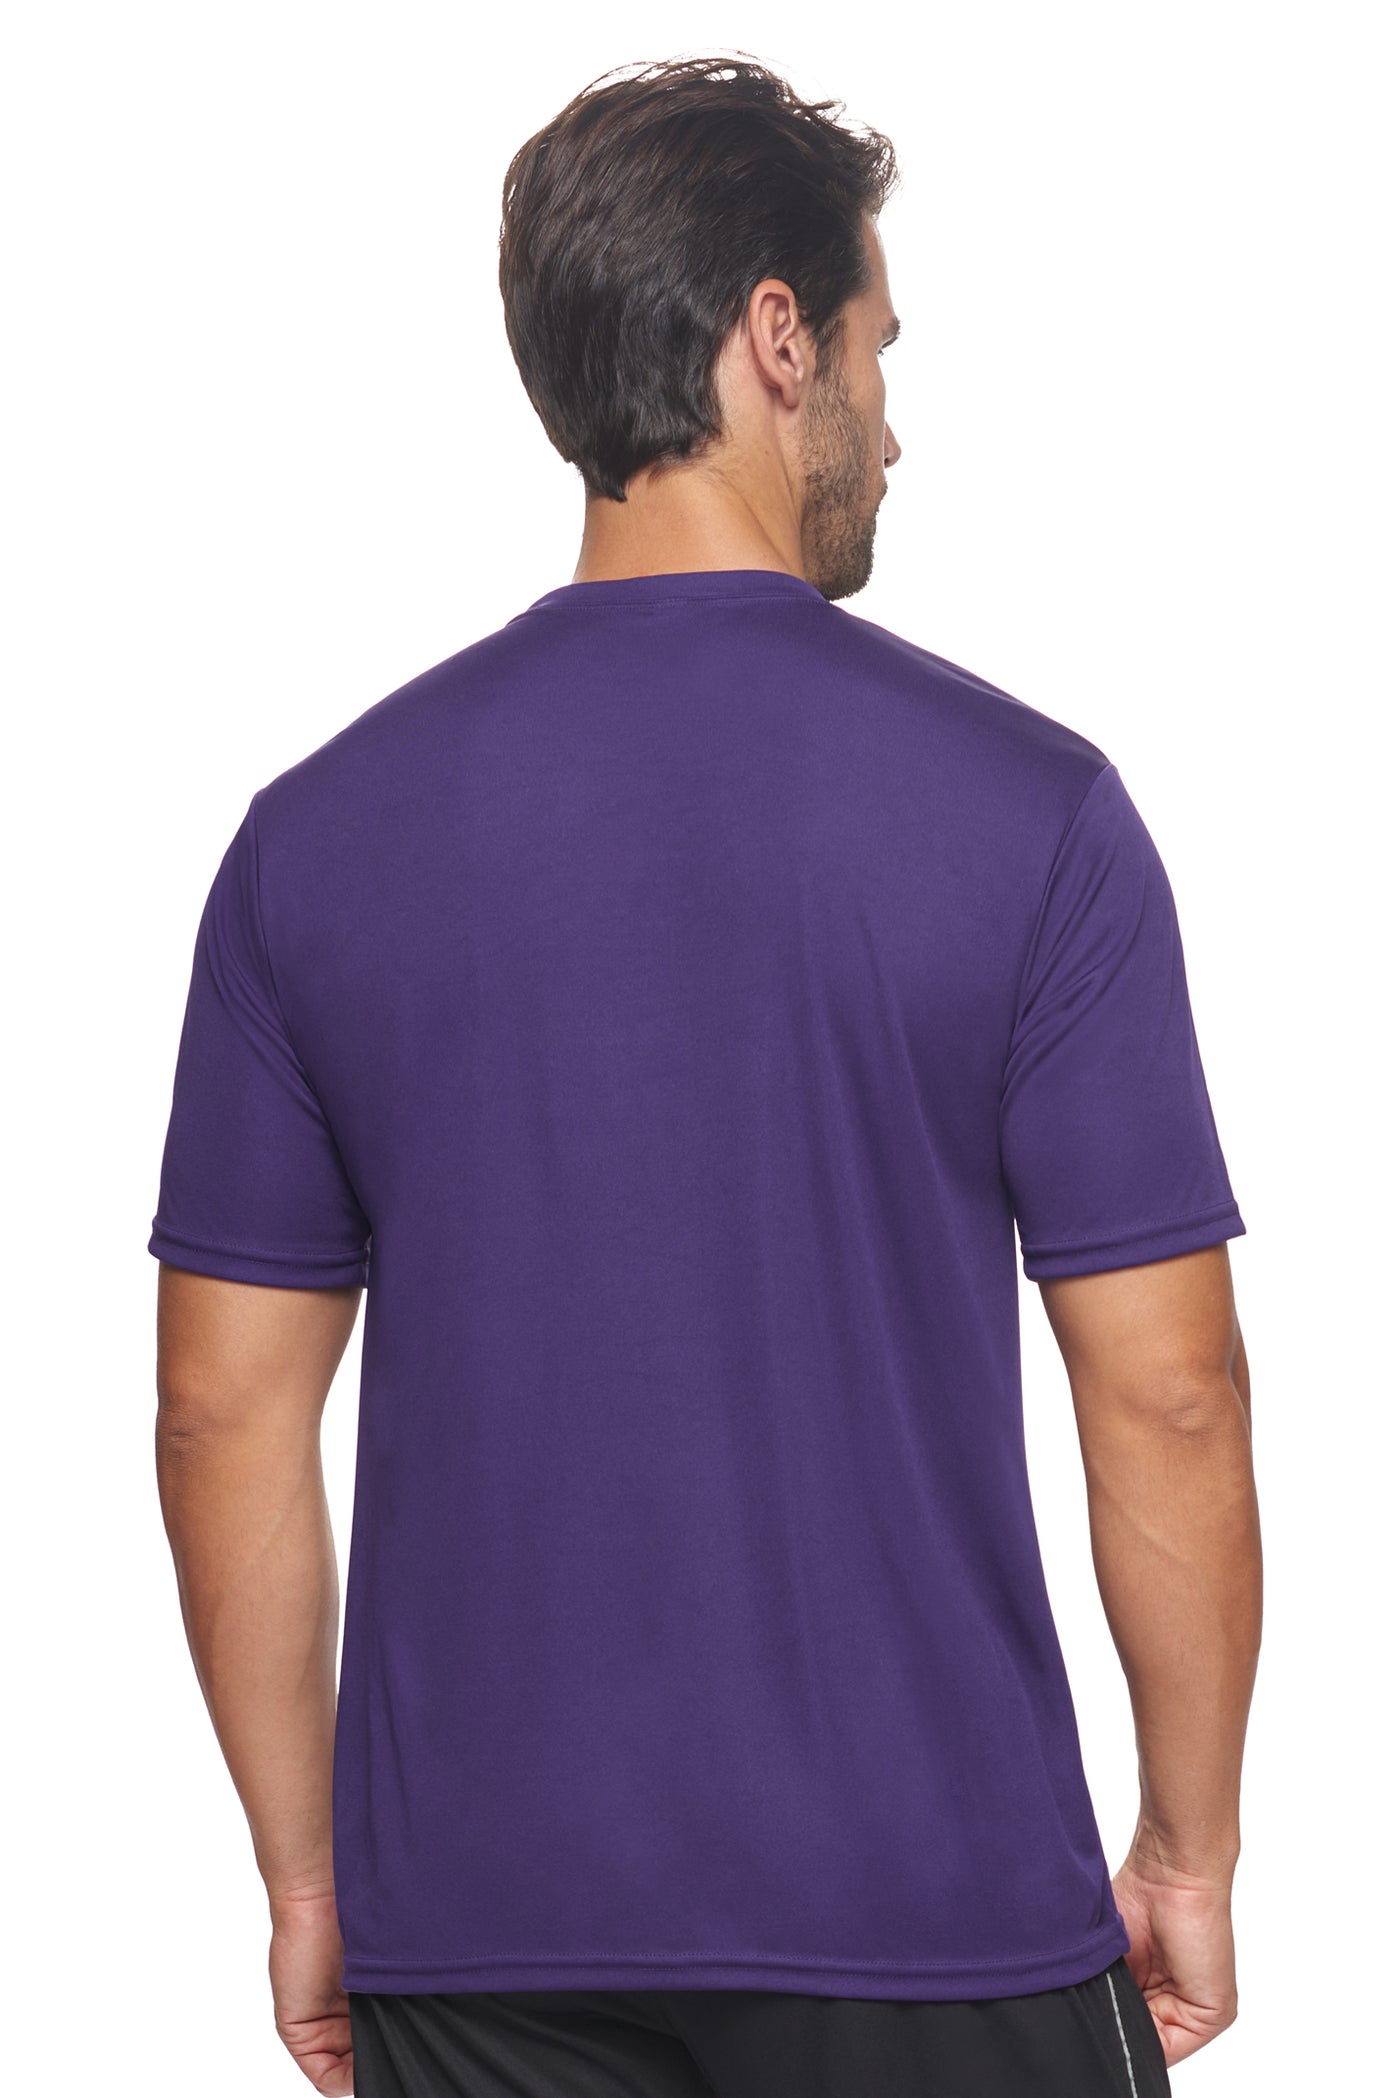 Expert Brand Retail Made in USA Men's Sportswear Activewear Running Long Sleeve Shirt Pk Max purple#color_dark-purple